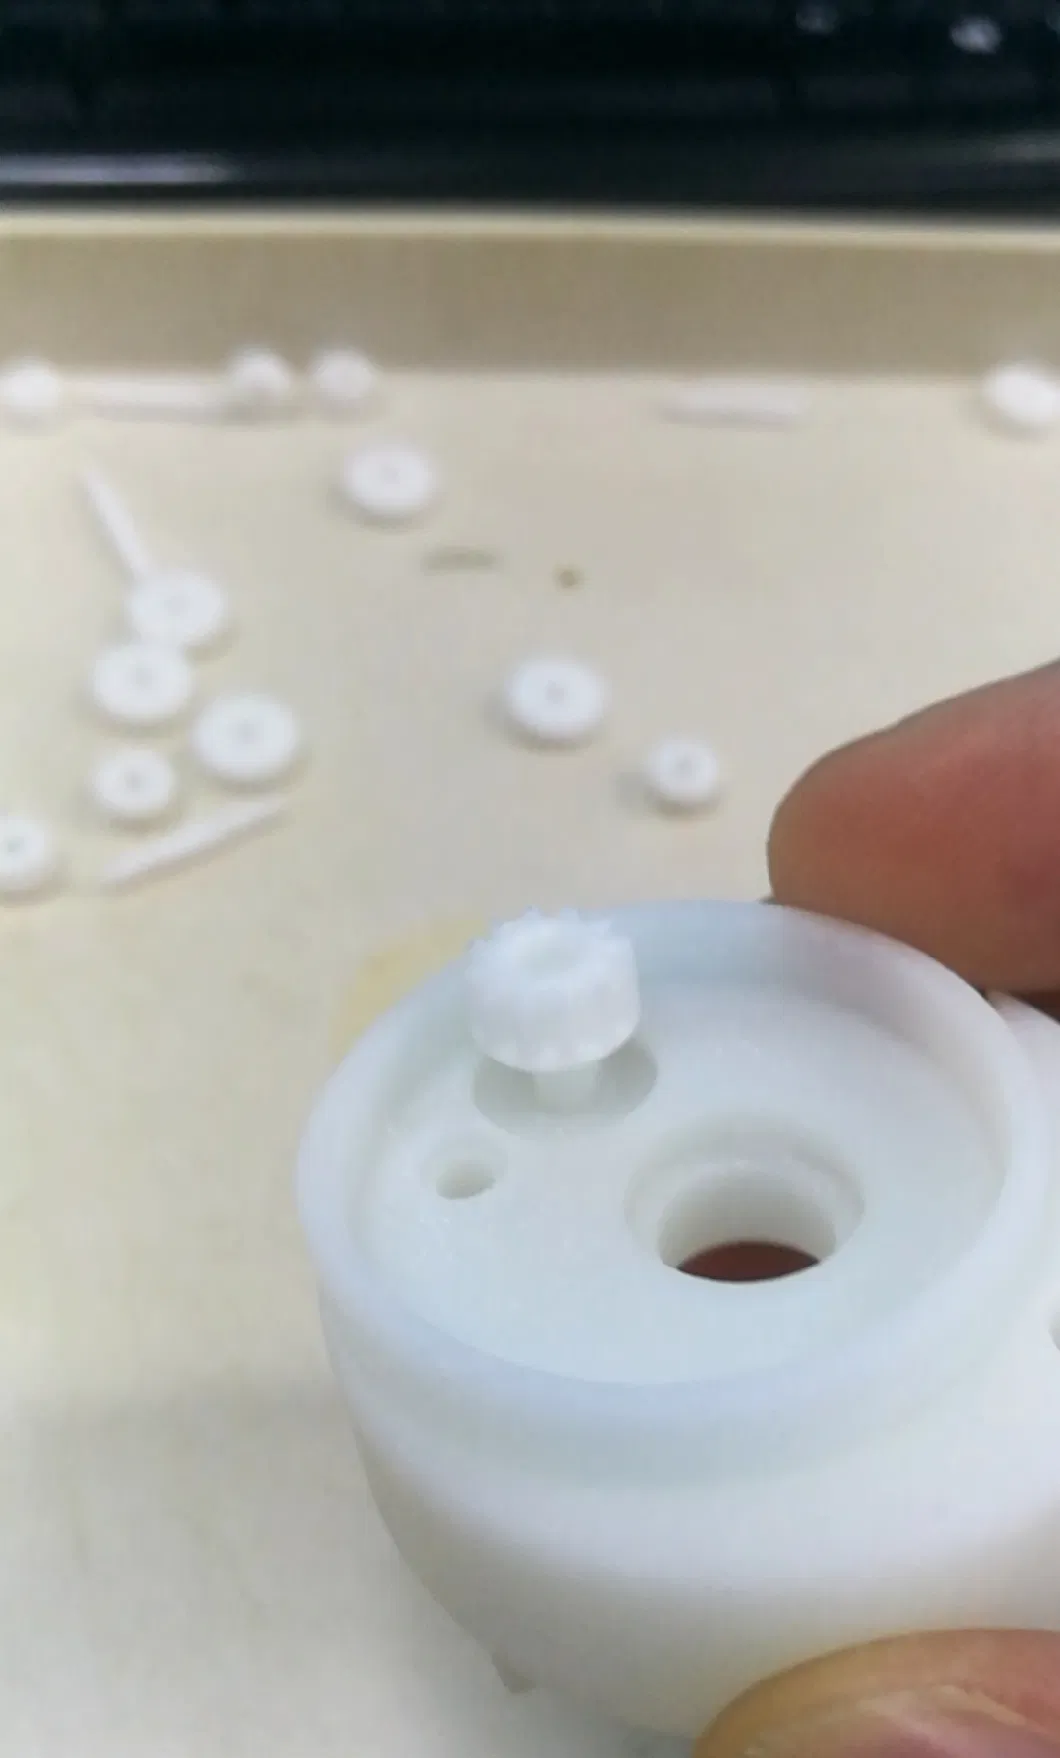 OEM Customer Design SLA 3D Printing Prototype Plastic Product Rapid Prototyping